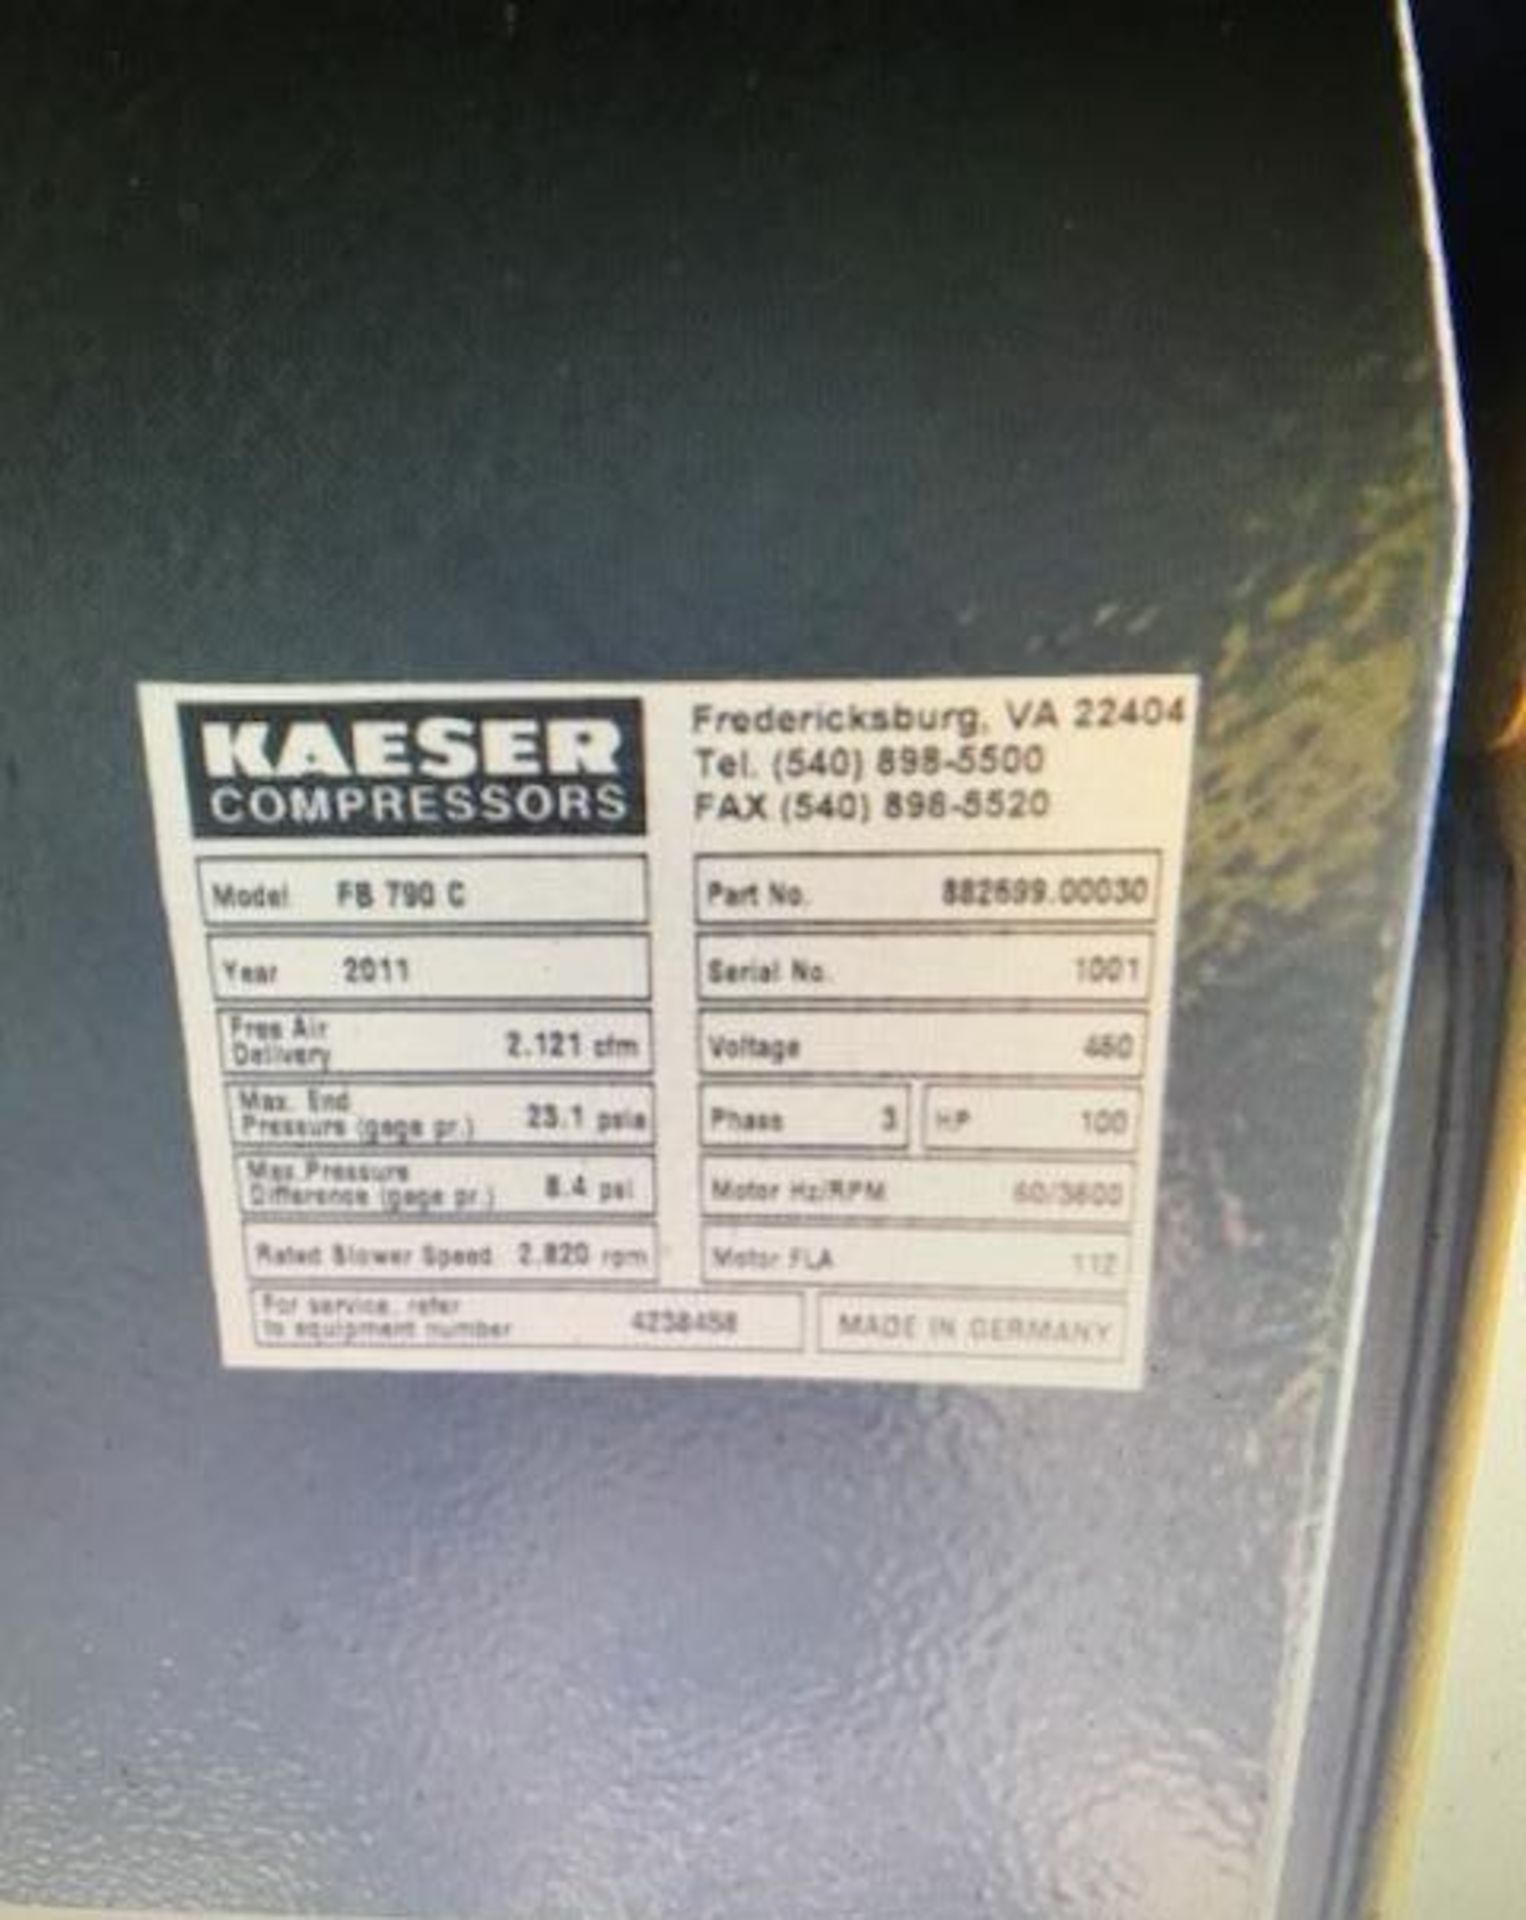 100 HP Kaeser Air Compressor Model FB790 C w/ ABB Controller. New in 2011 - Image 9 of 9